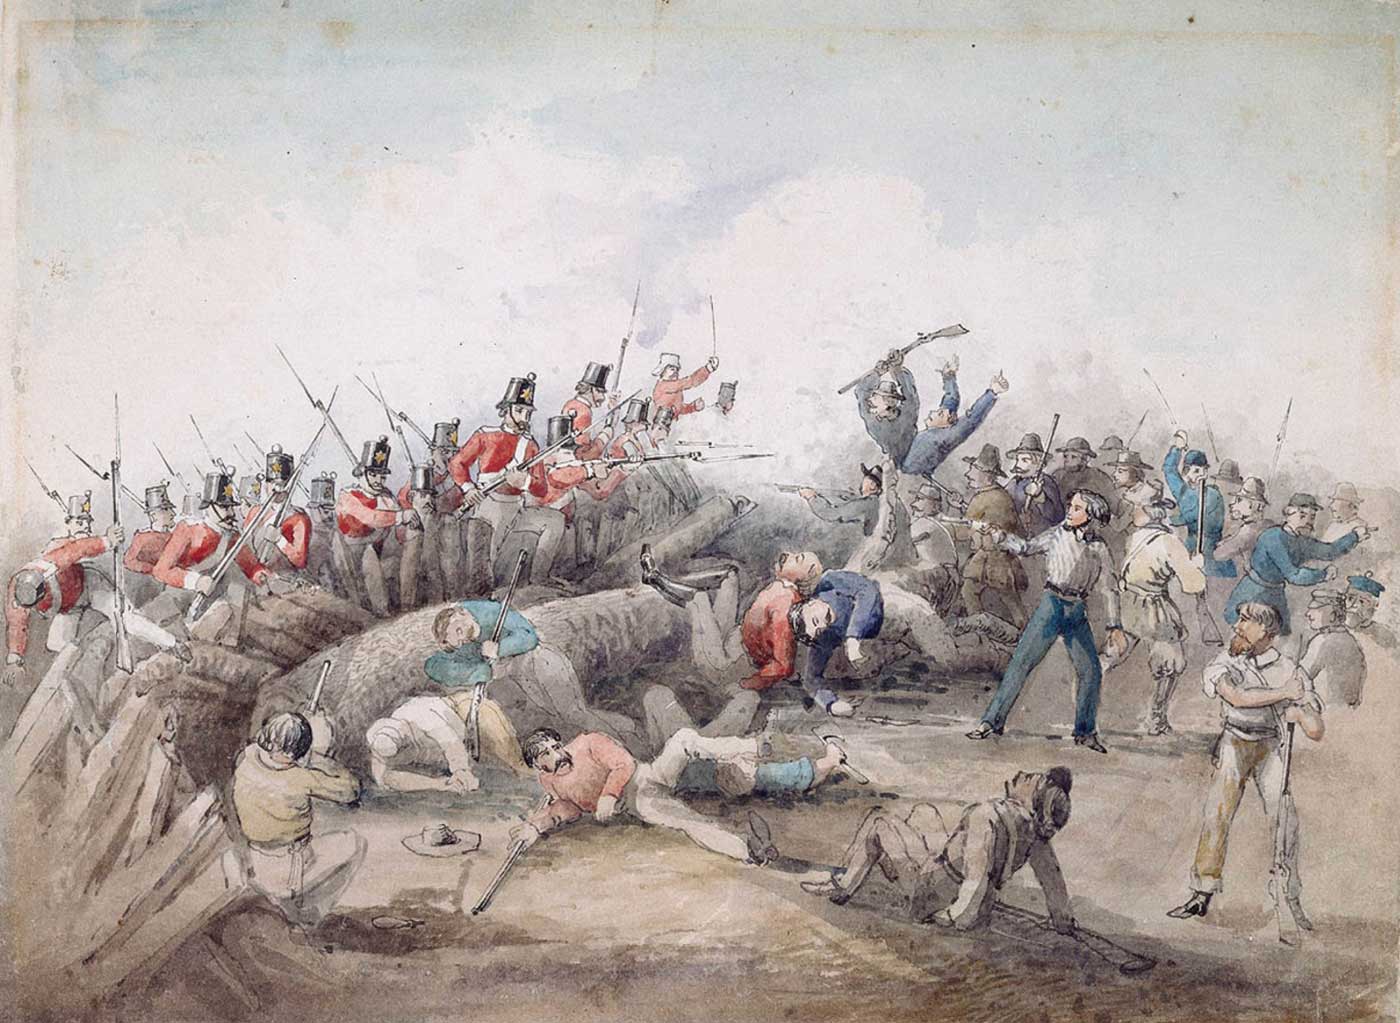 <p><em>Eureka Stockade Riot,</em>&nbsp;JB Henderson, 1854, watercolour</p>
